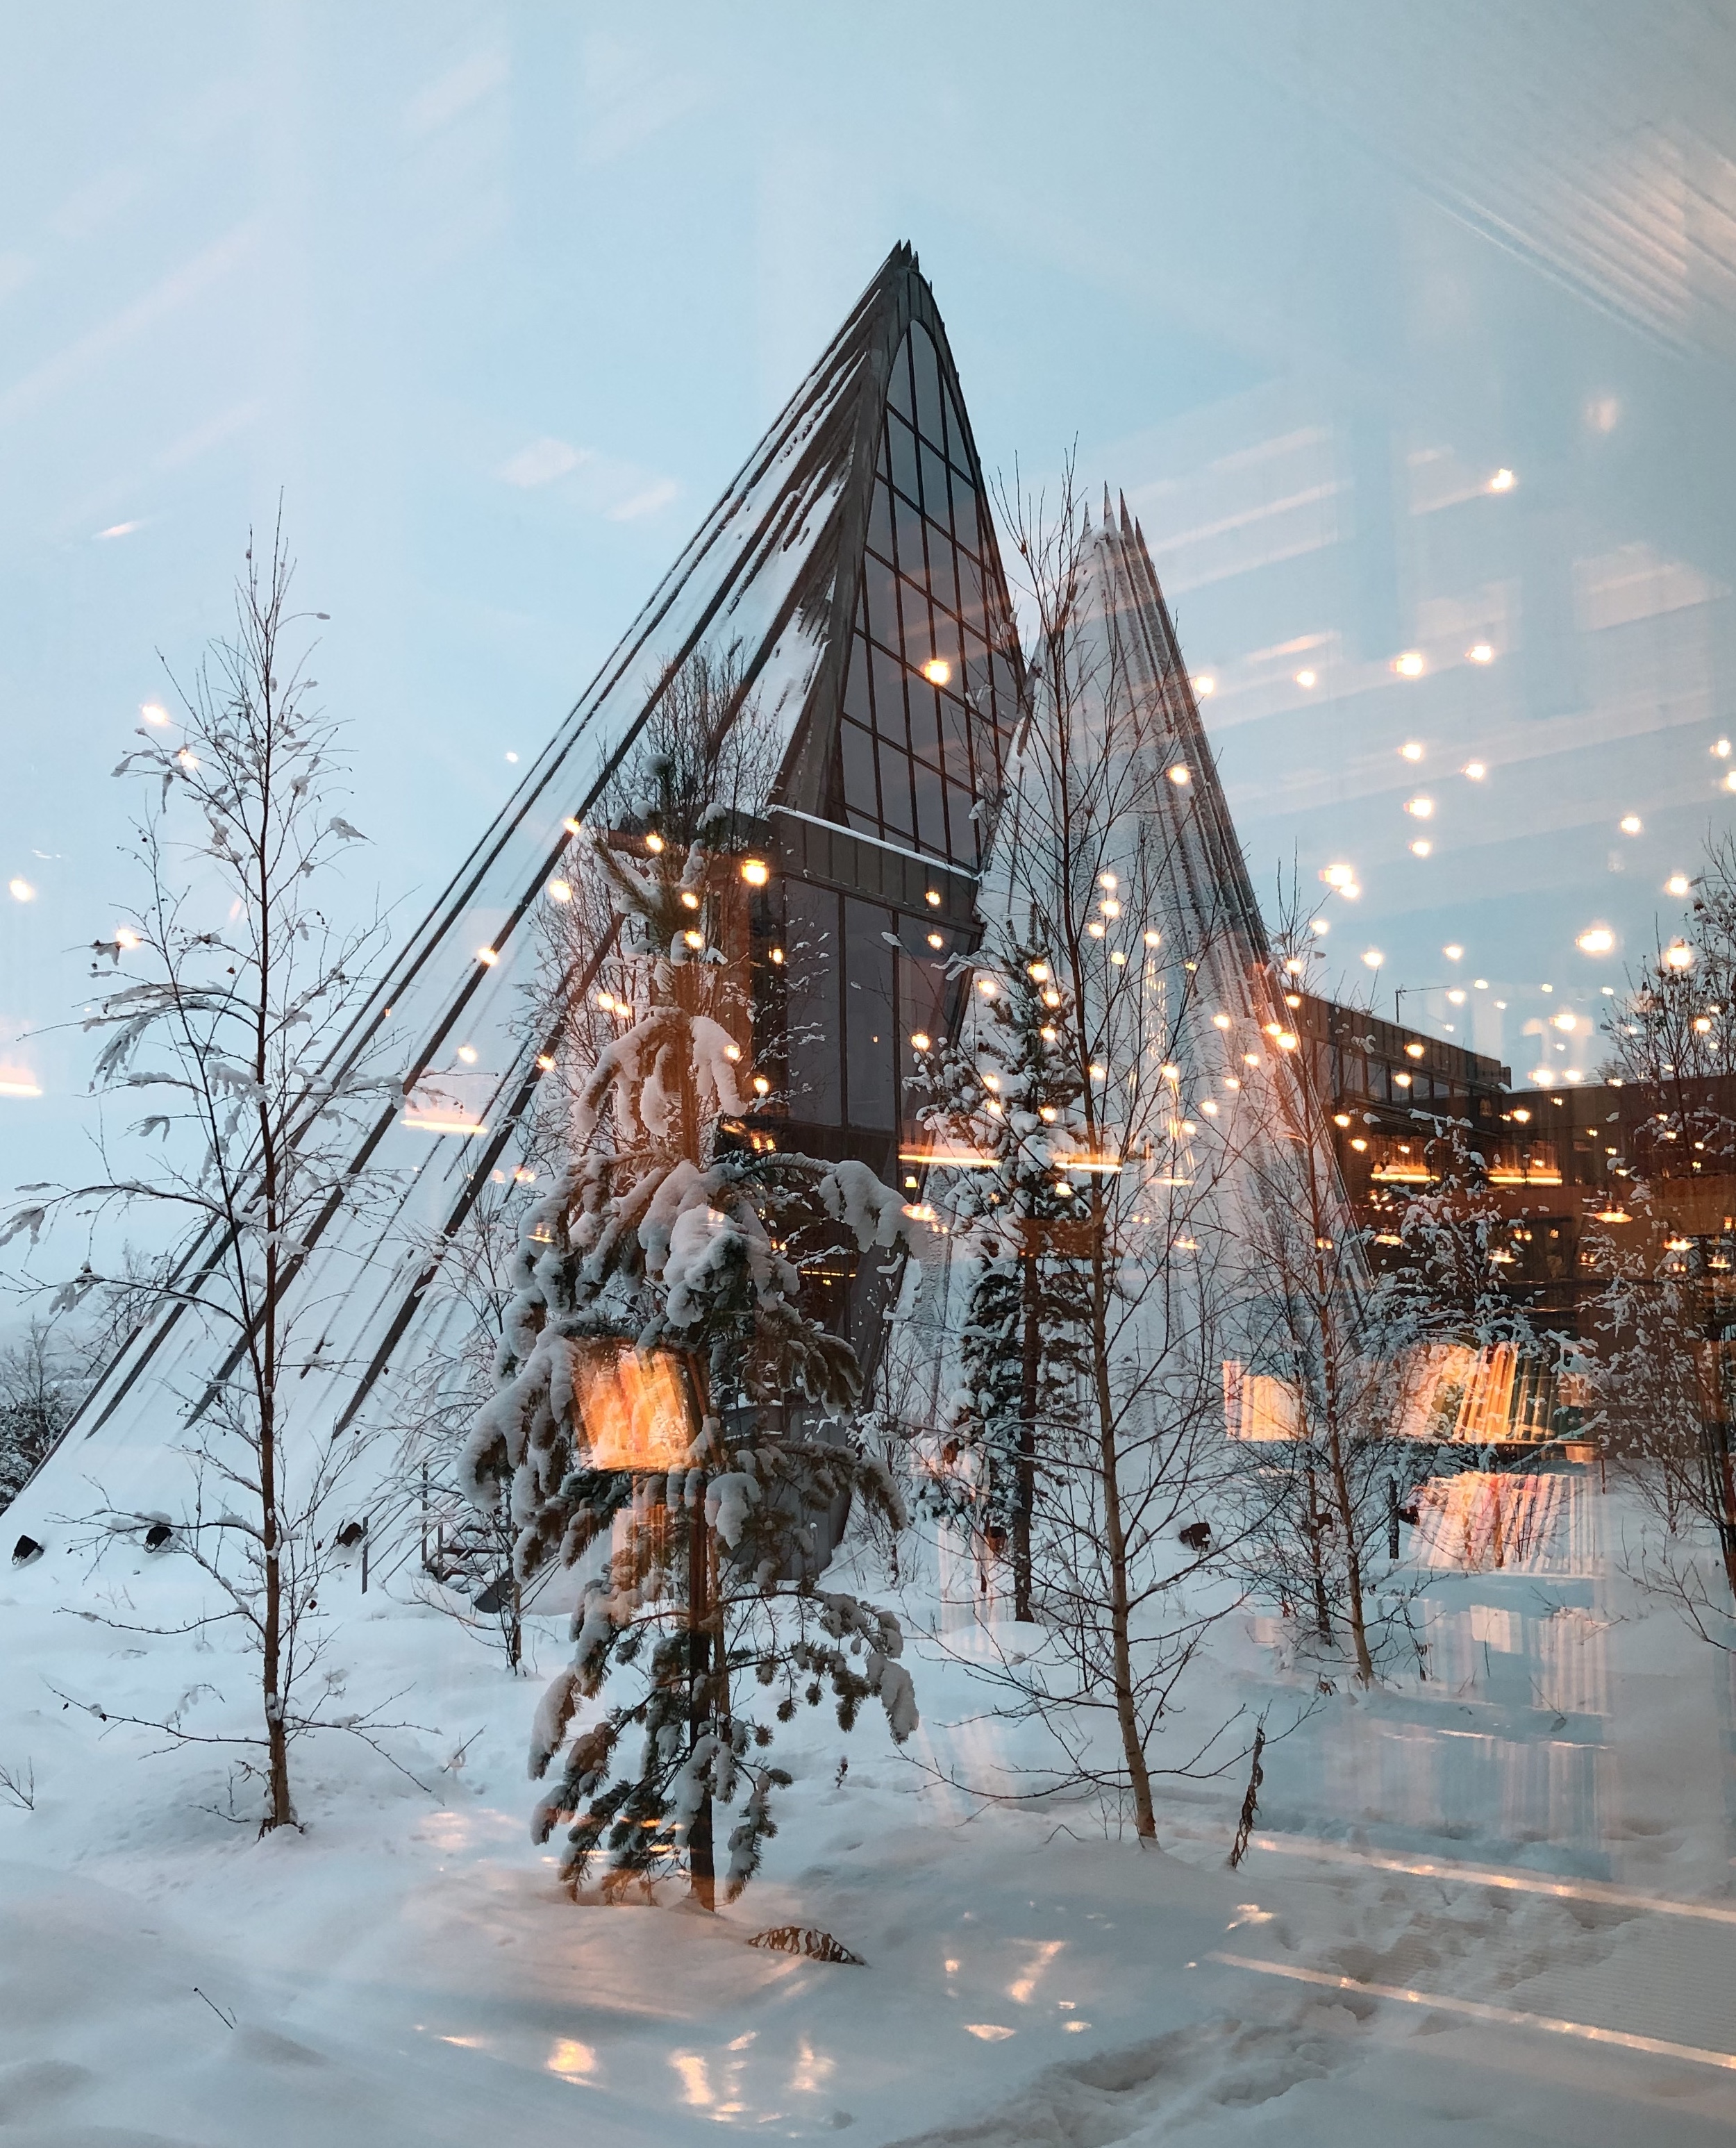 Das Sámi Parlament in Norwegen. Astrid Carlsen / CC BY 4.0